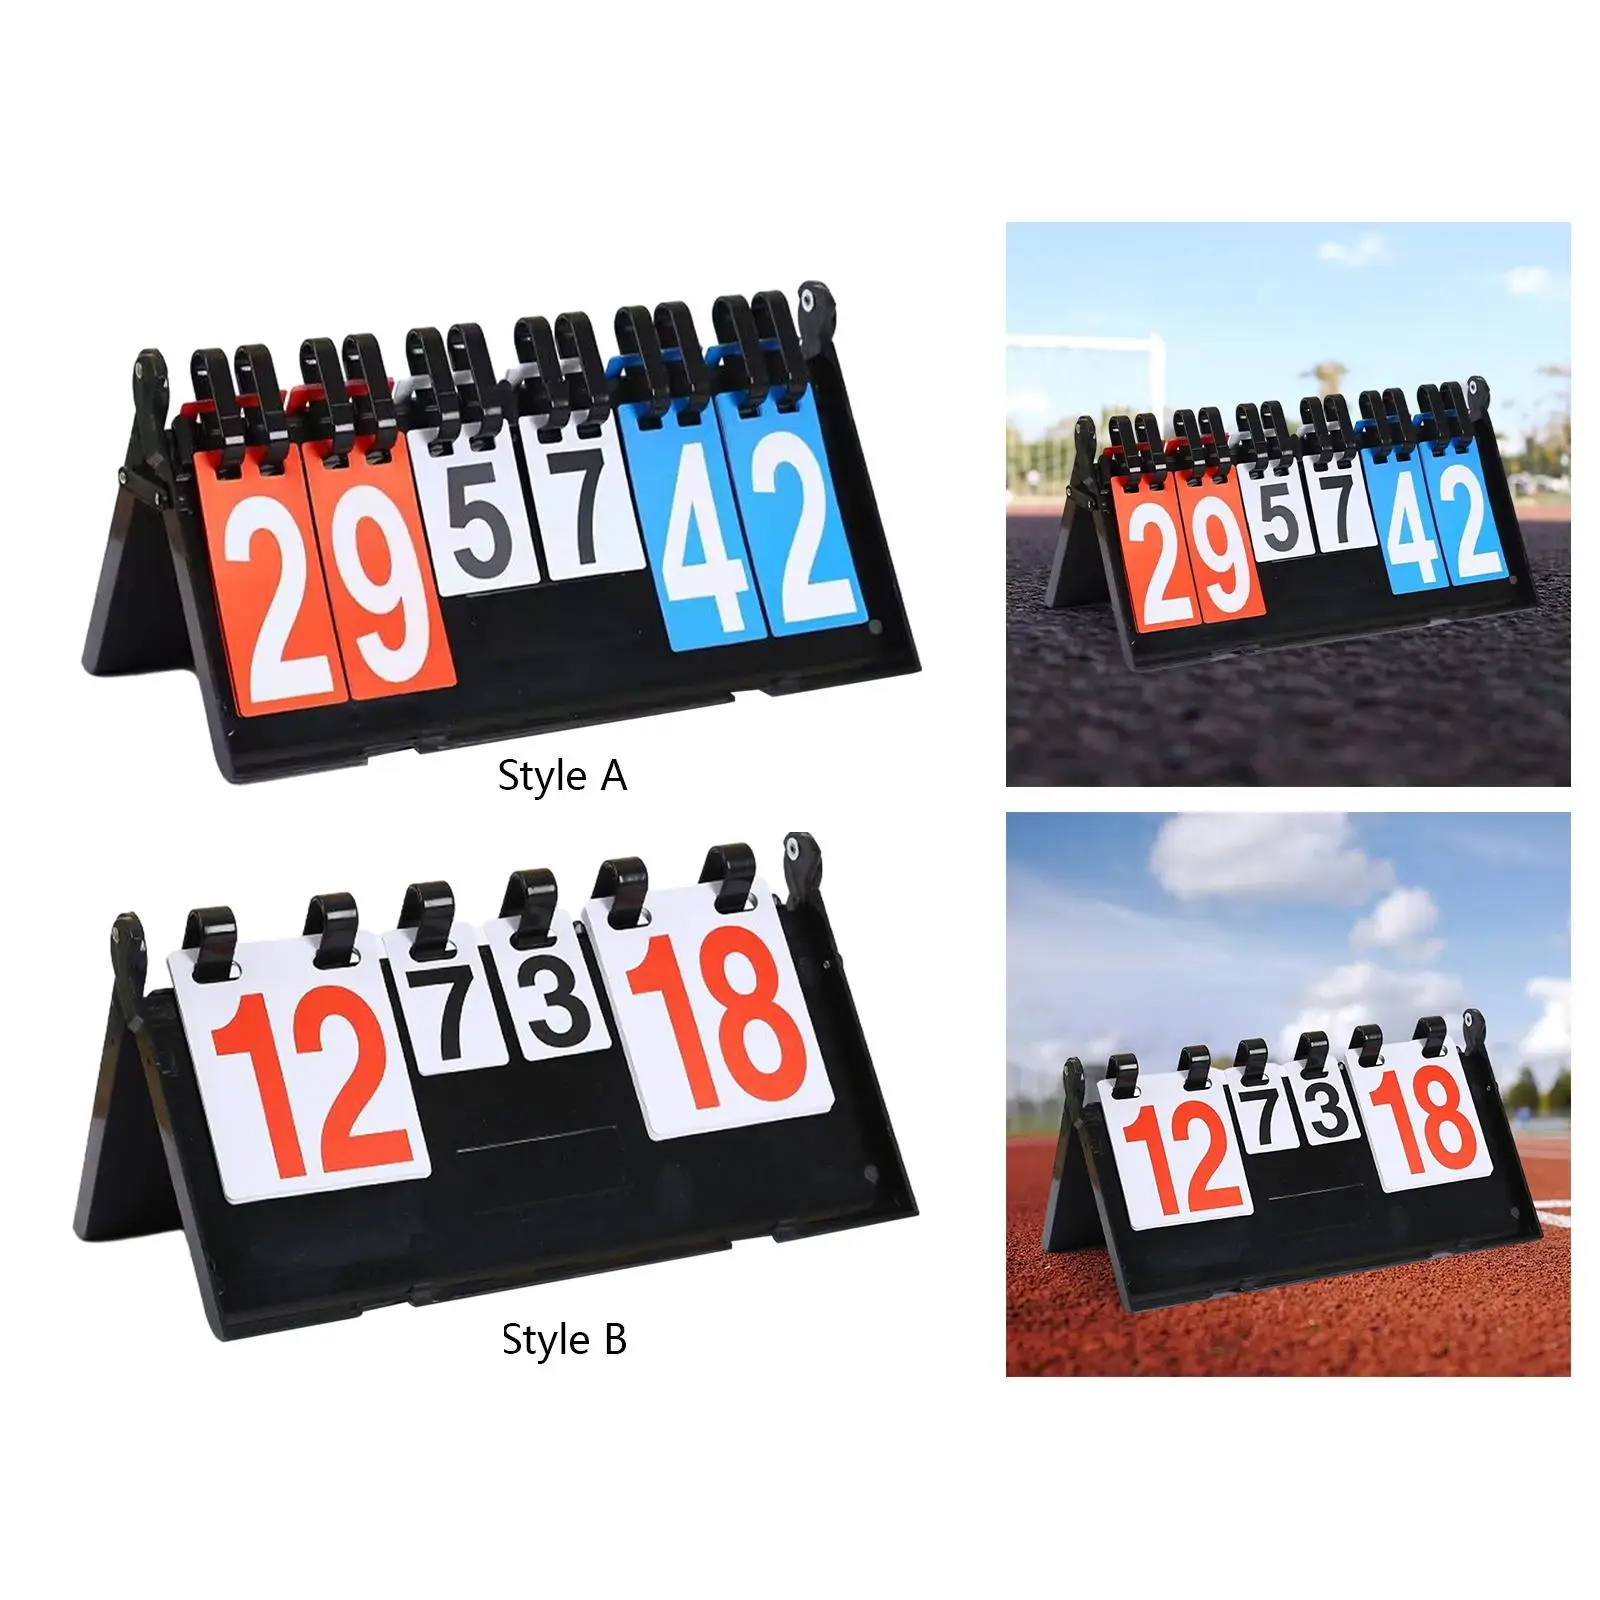 Score Board Scoreboard Compact Manual Foldable Professional Scoreboard Table